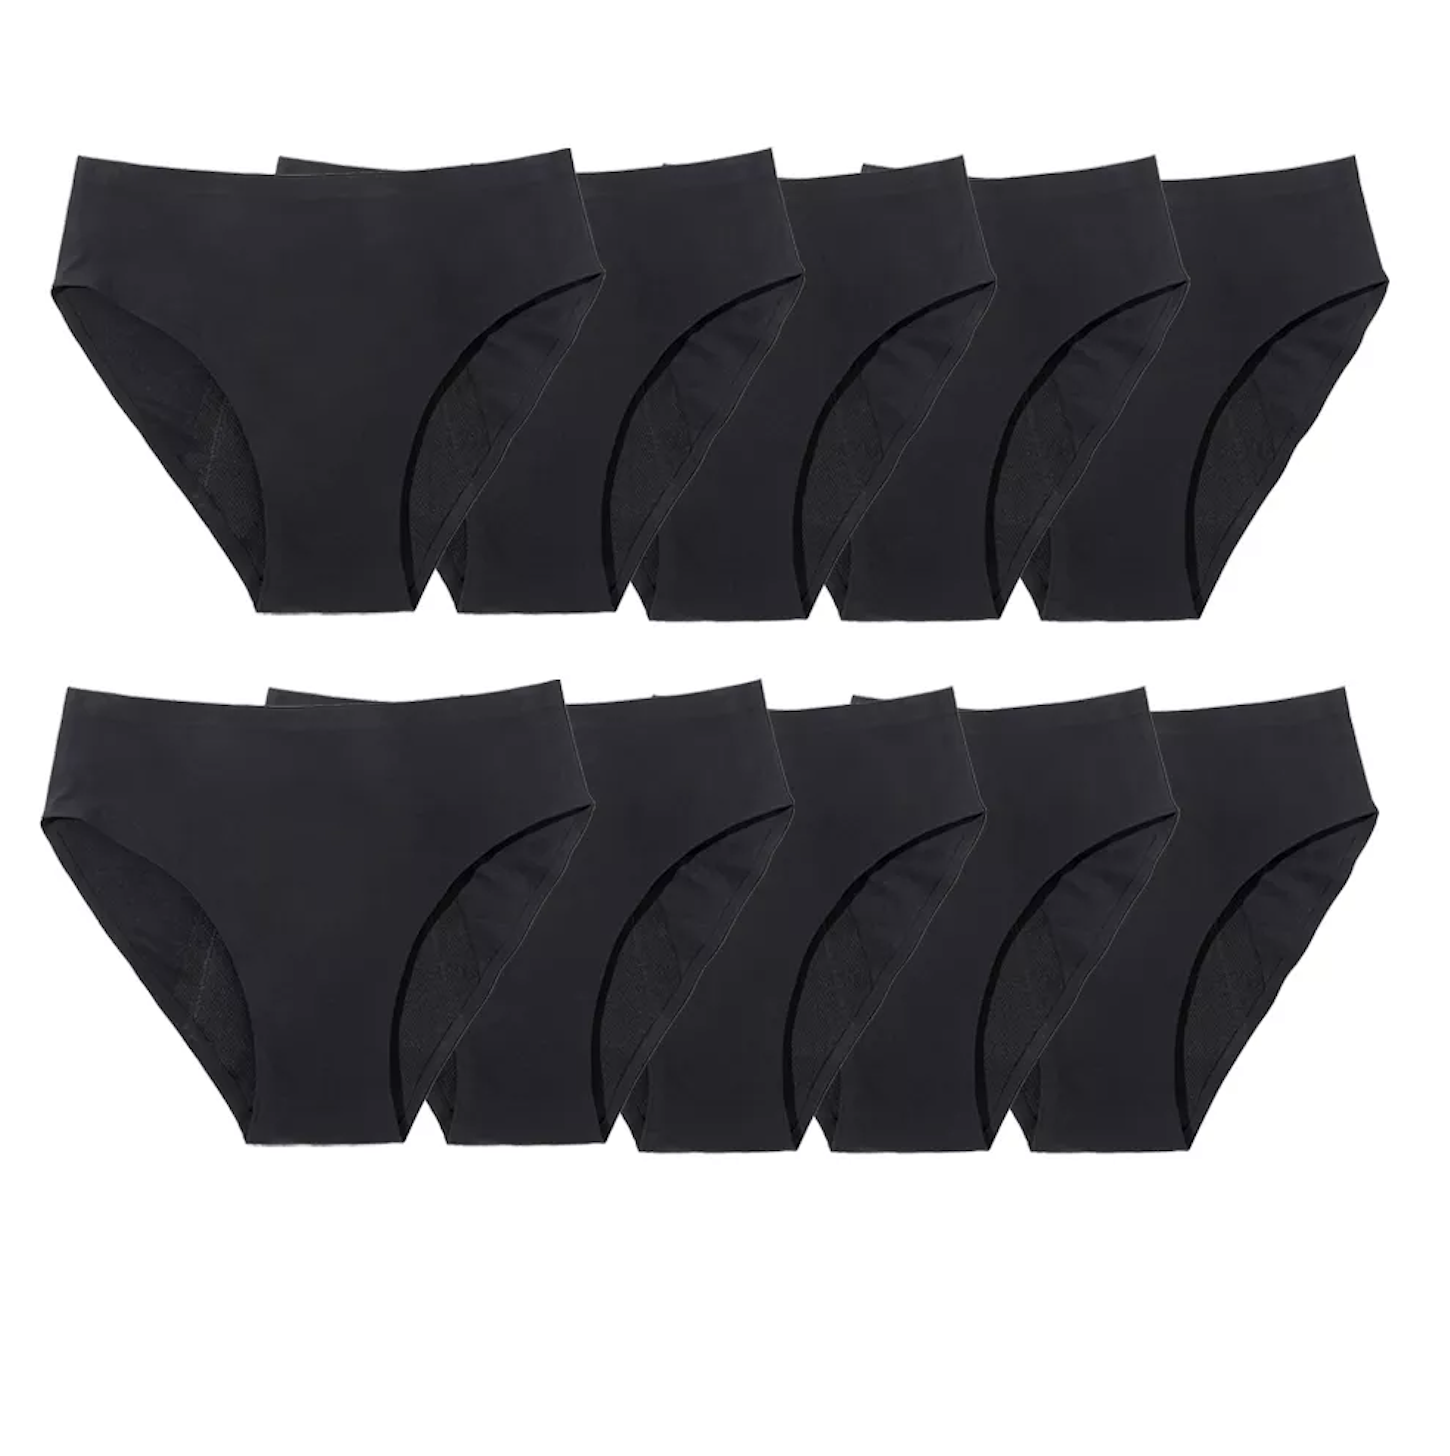 Ellza Period Underwear - Ultra Protect Model